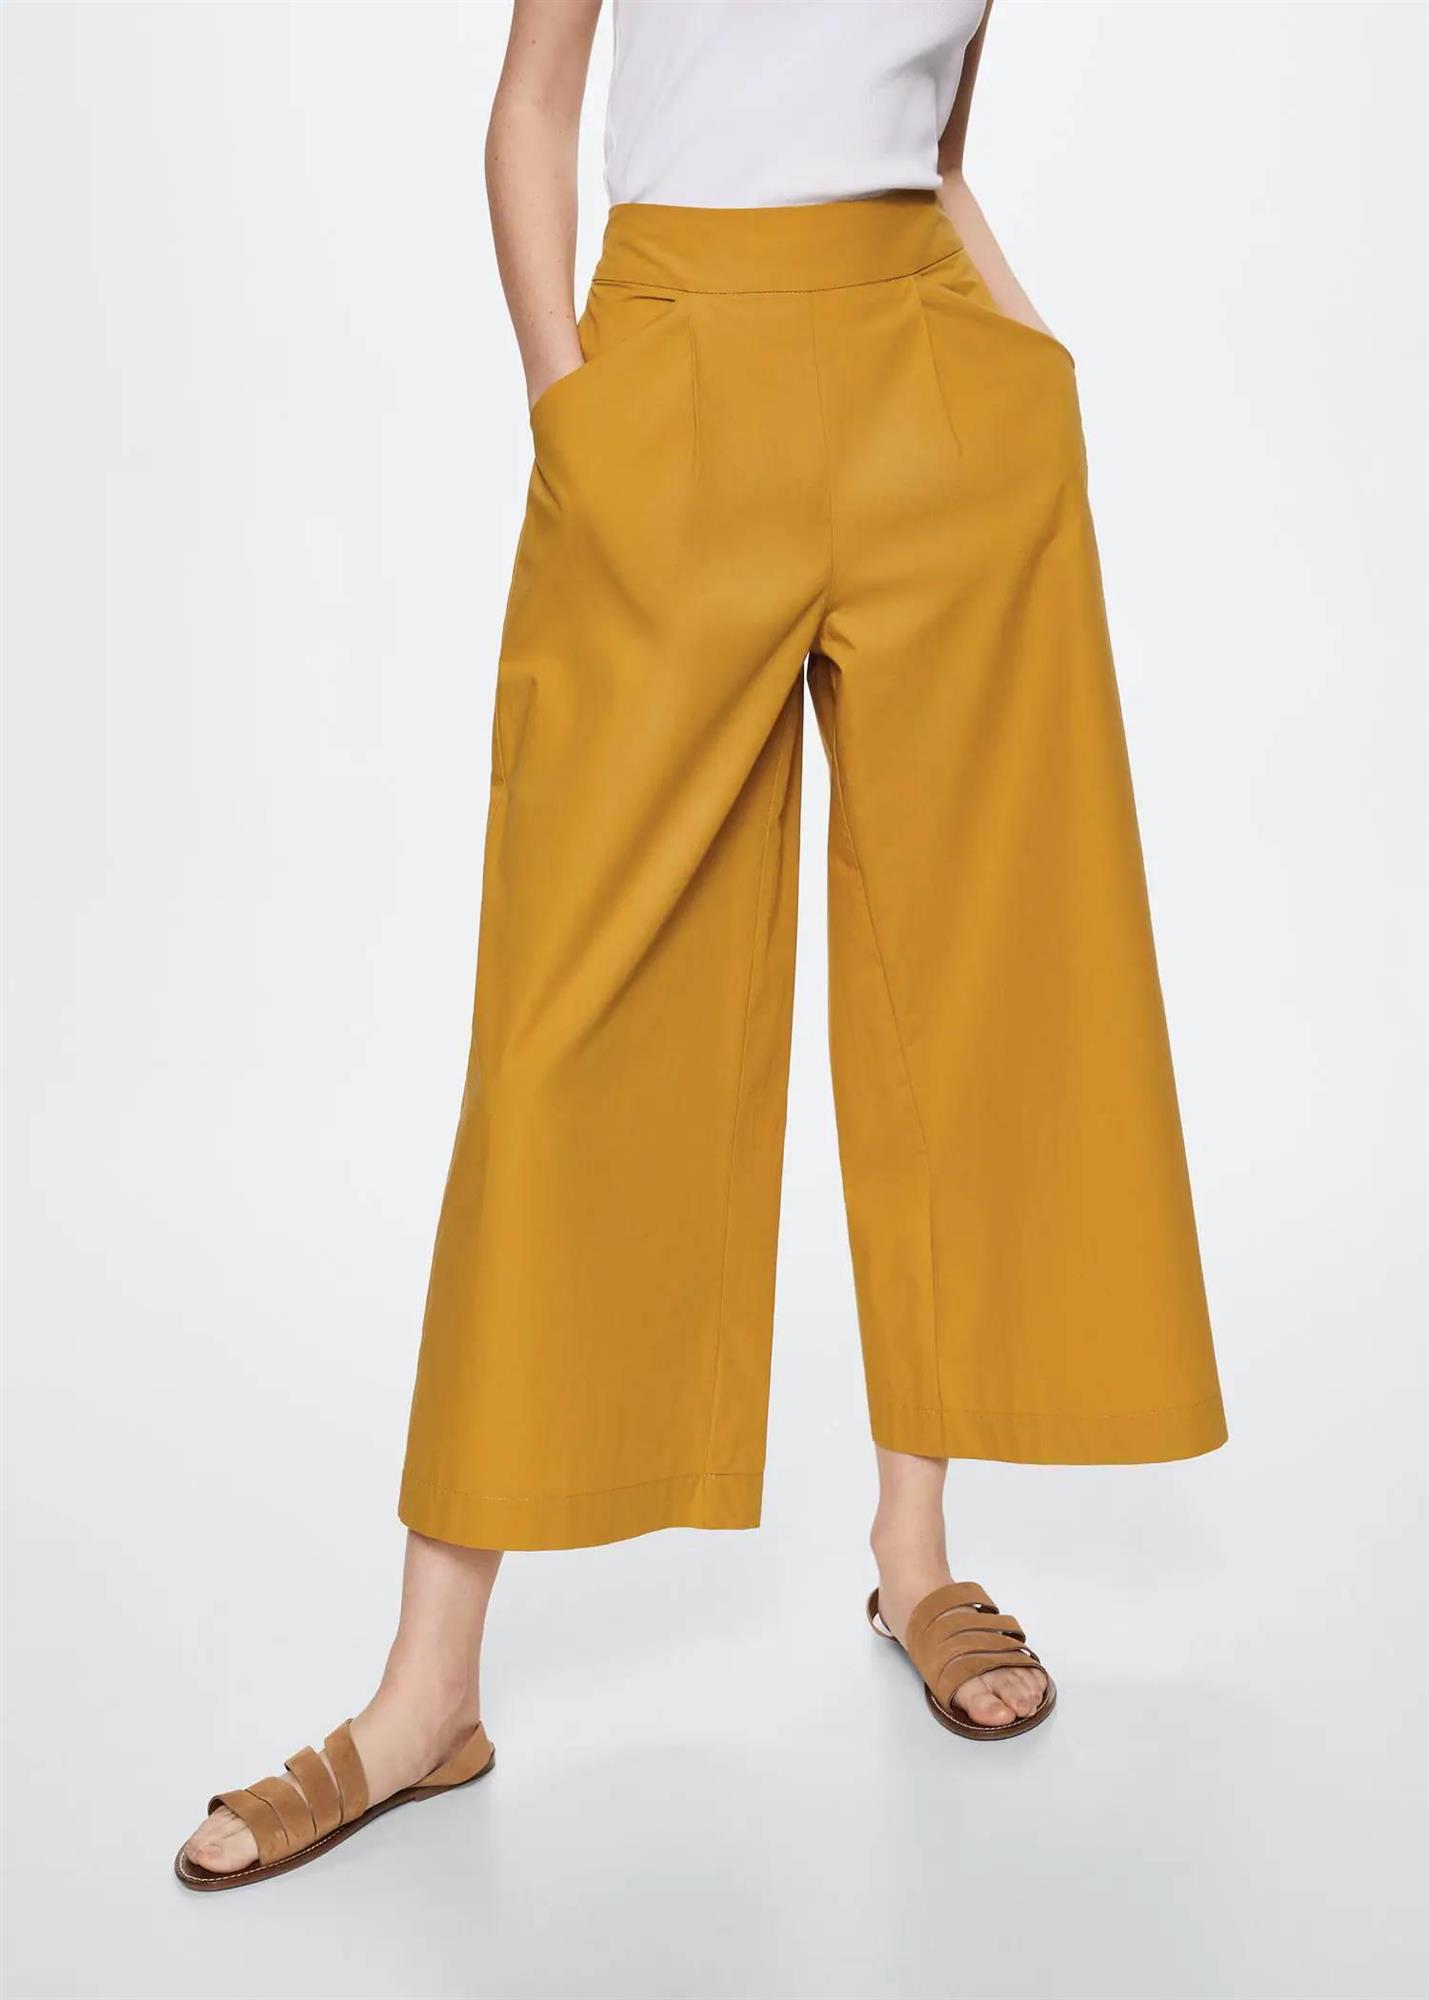 Pantalón culotte en color caldera, Mango